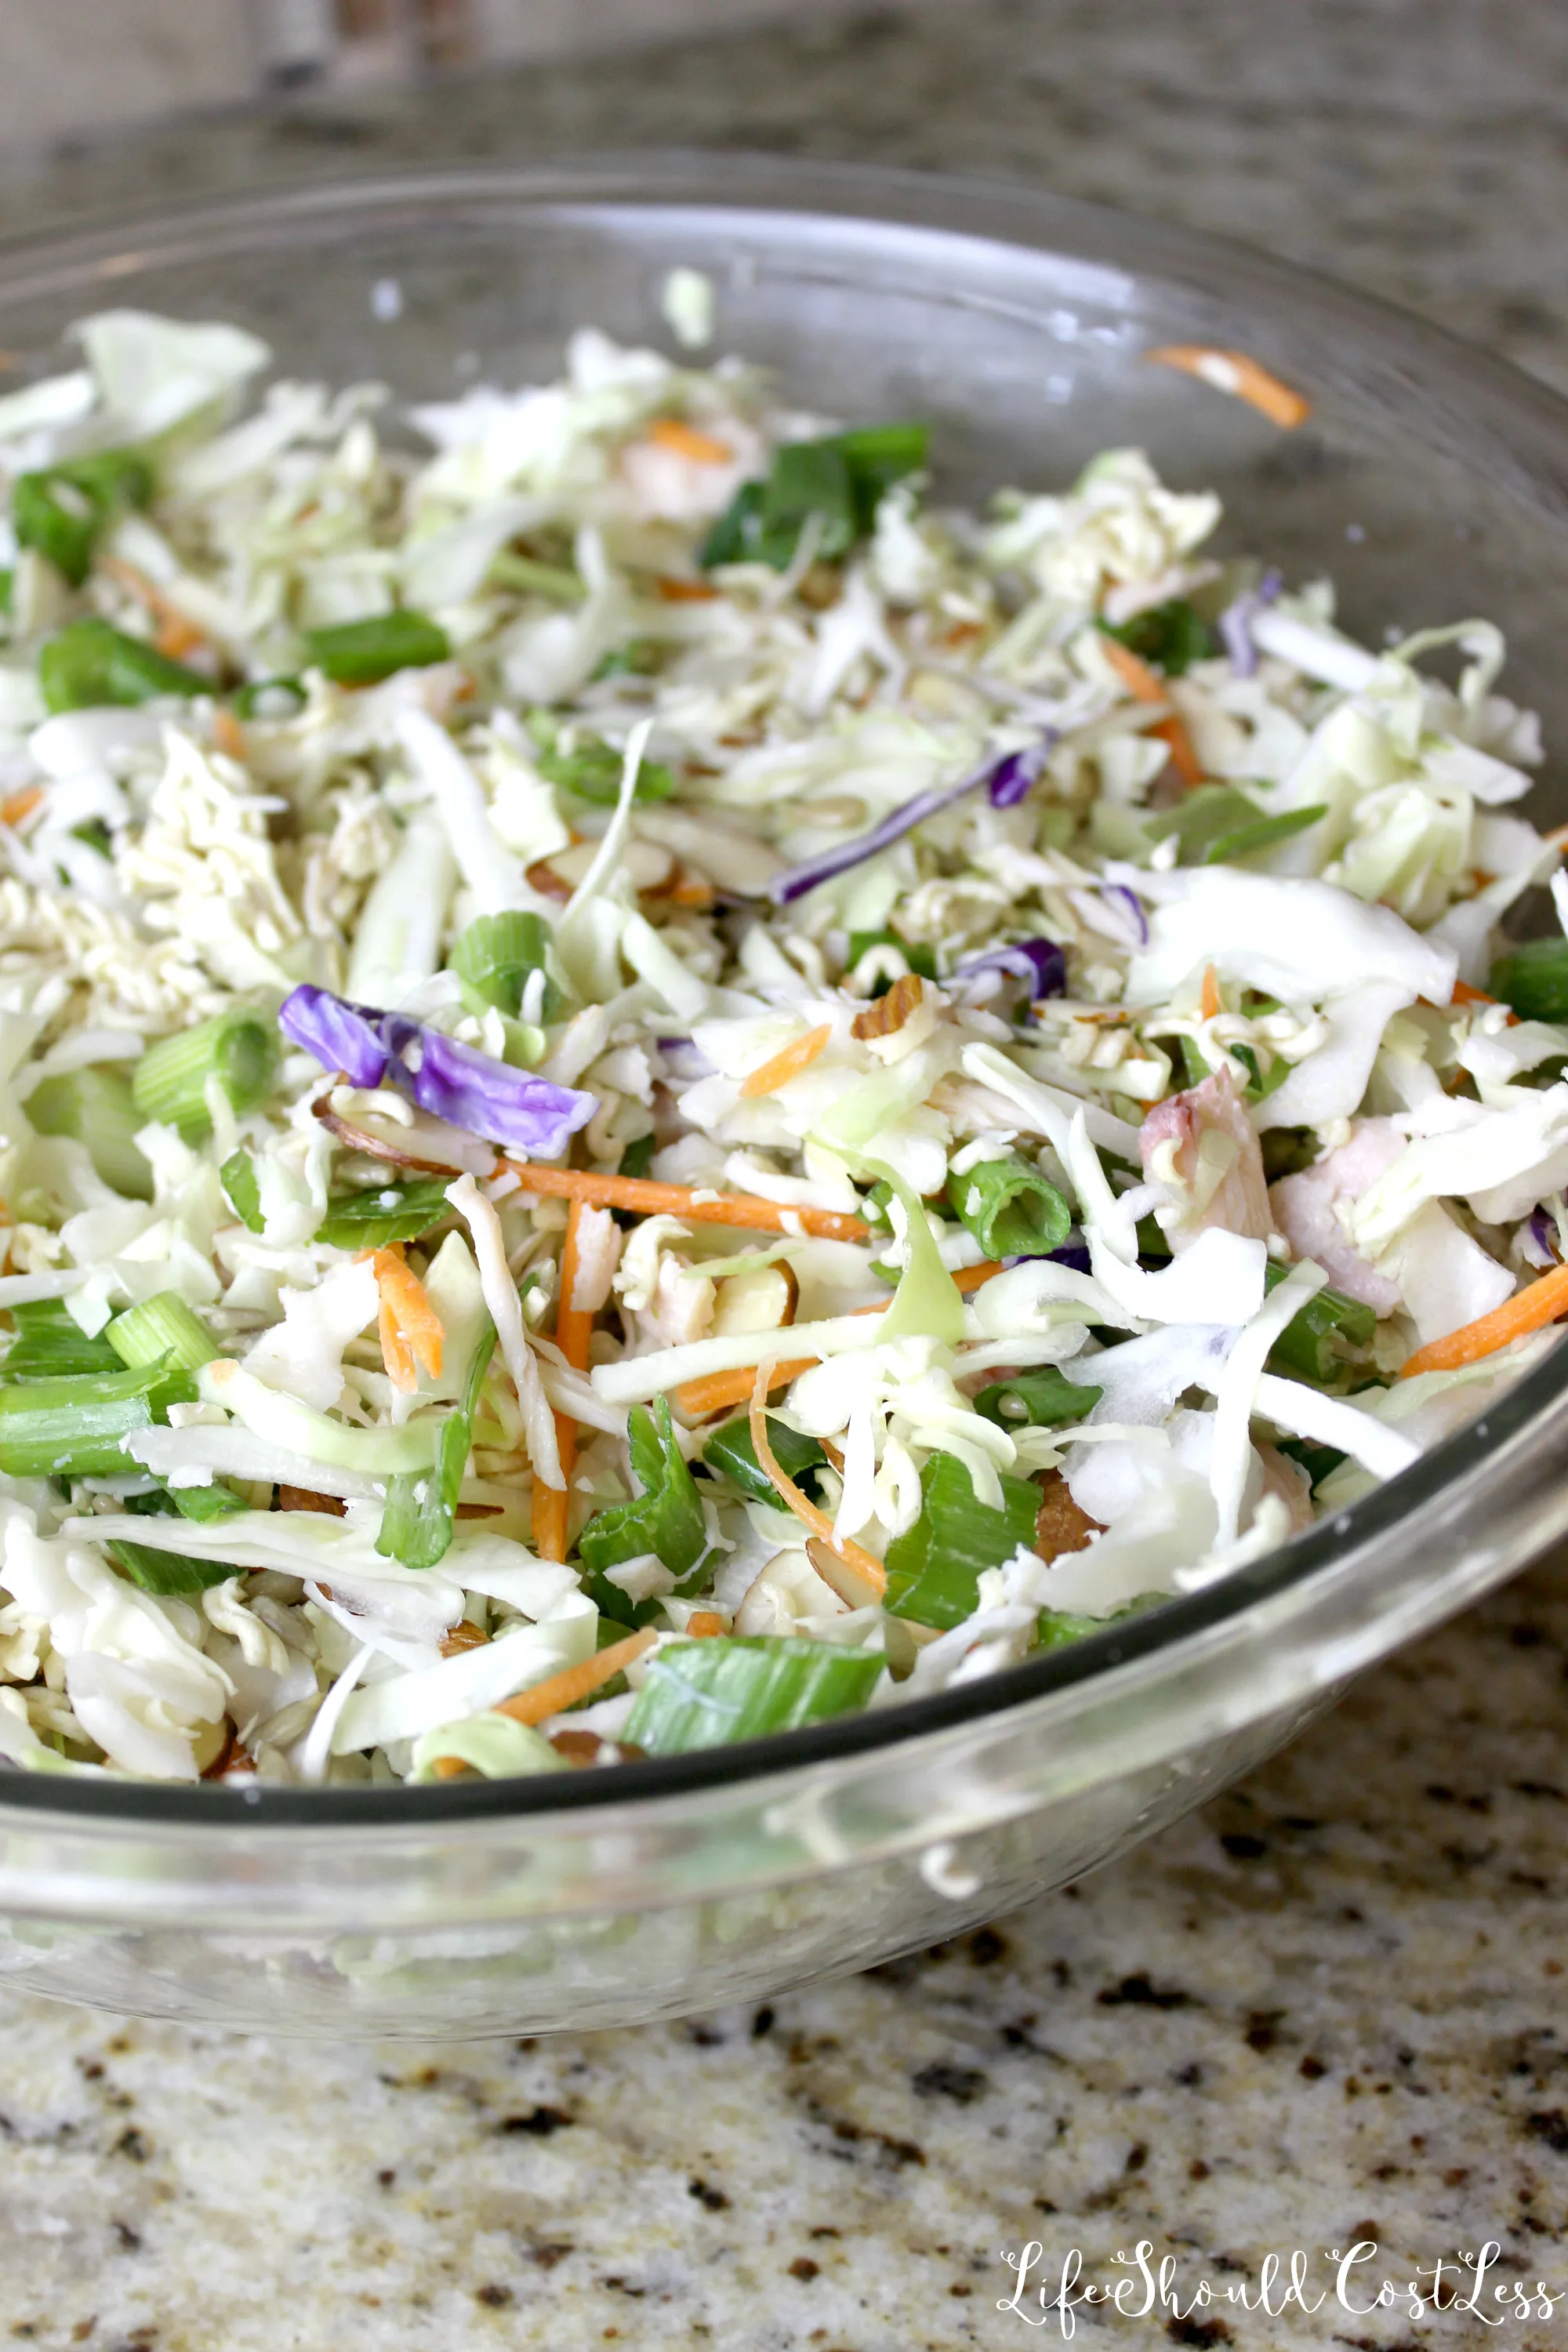 Top Ramen Chicken Salad